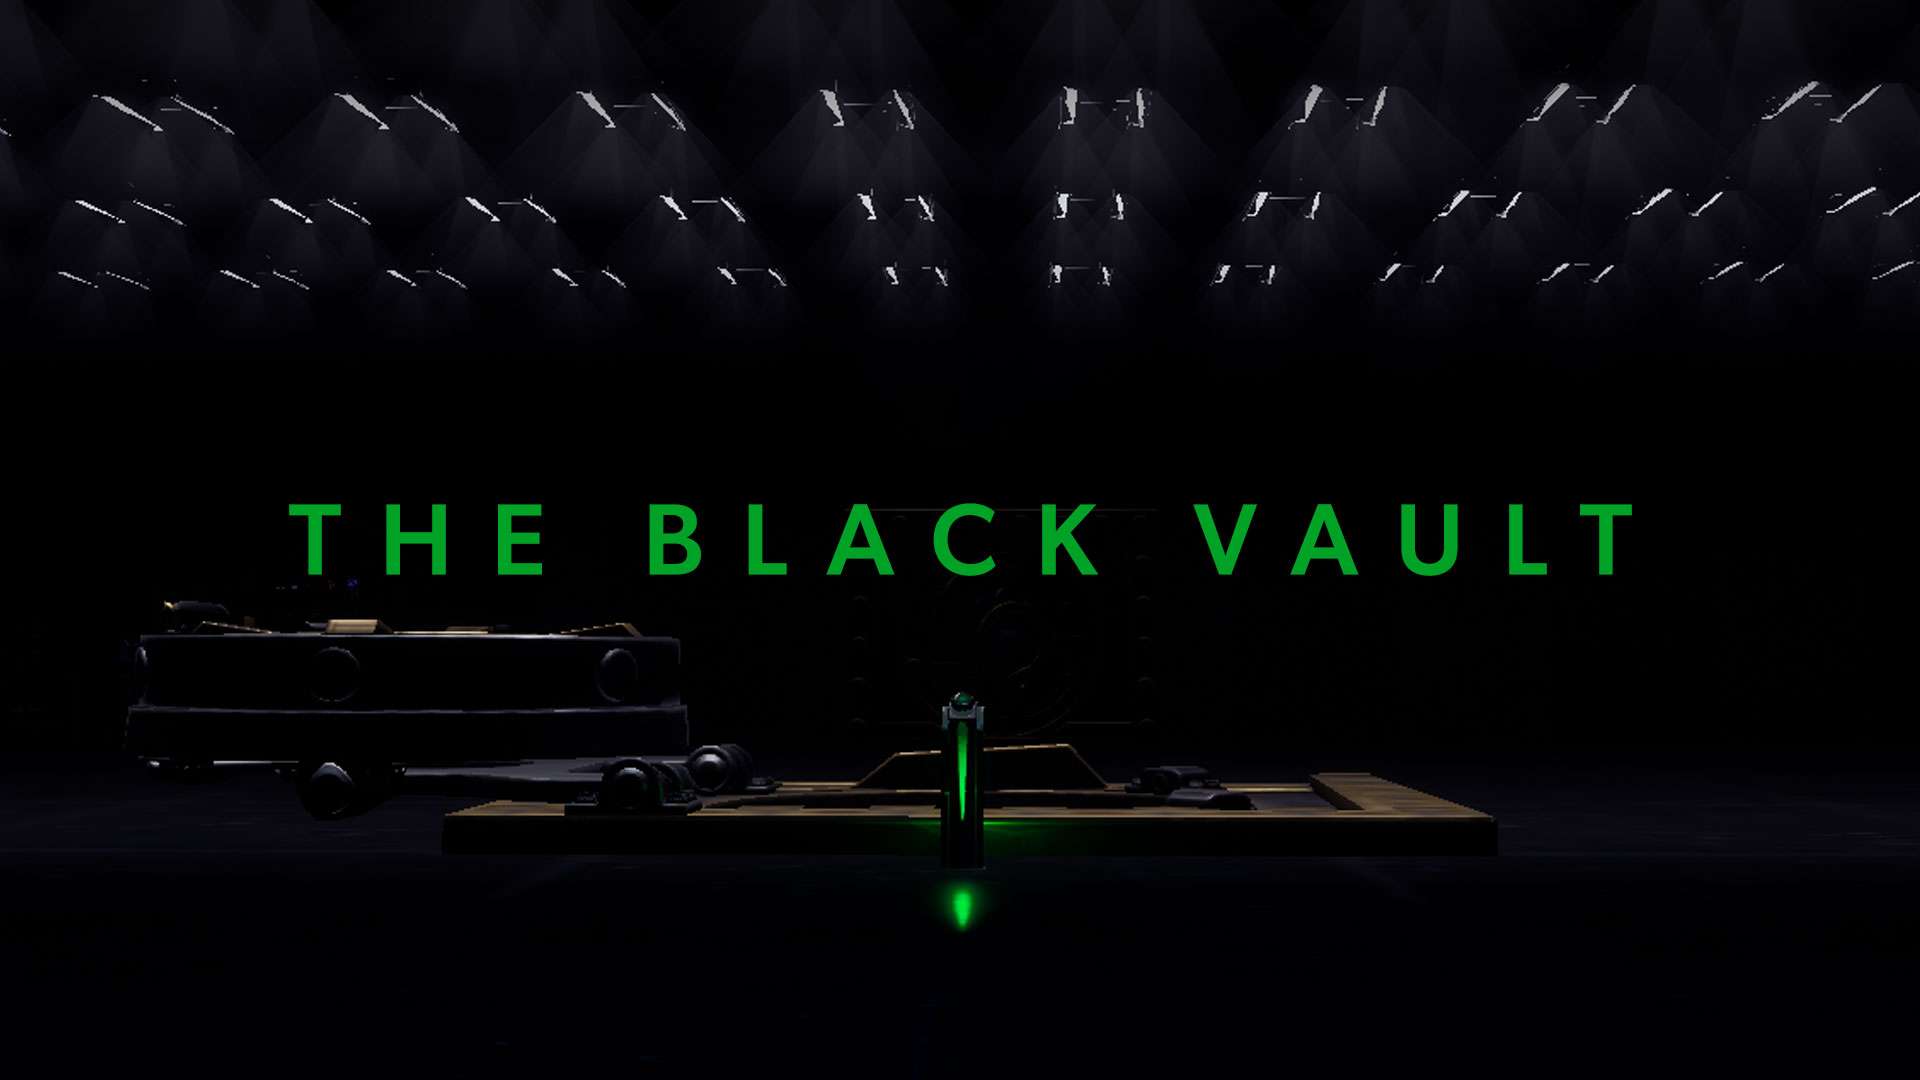 THE BLACK VAULT - MYTHIC BATTLE FFA